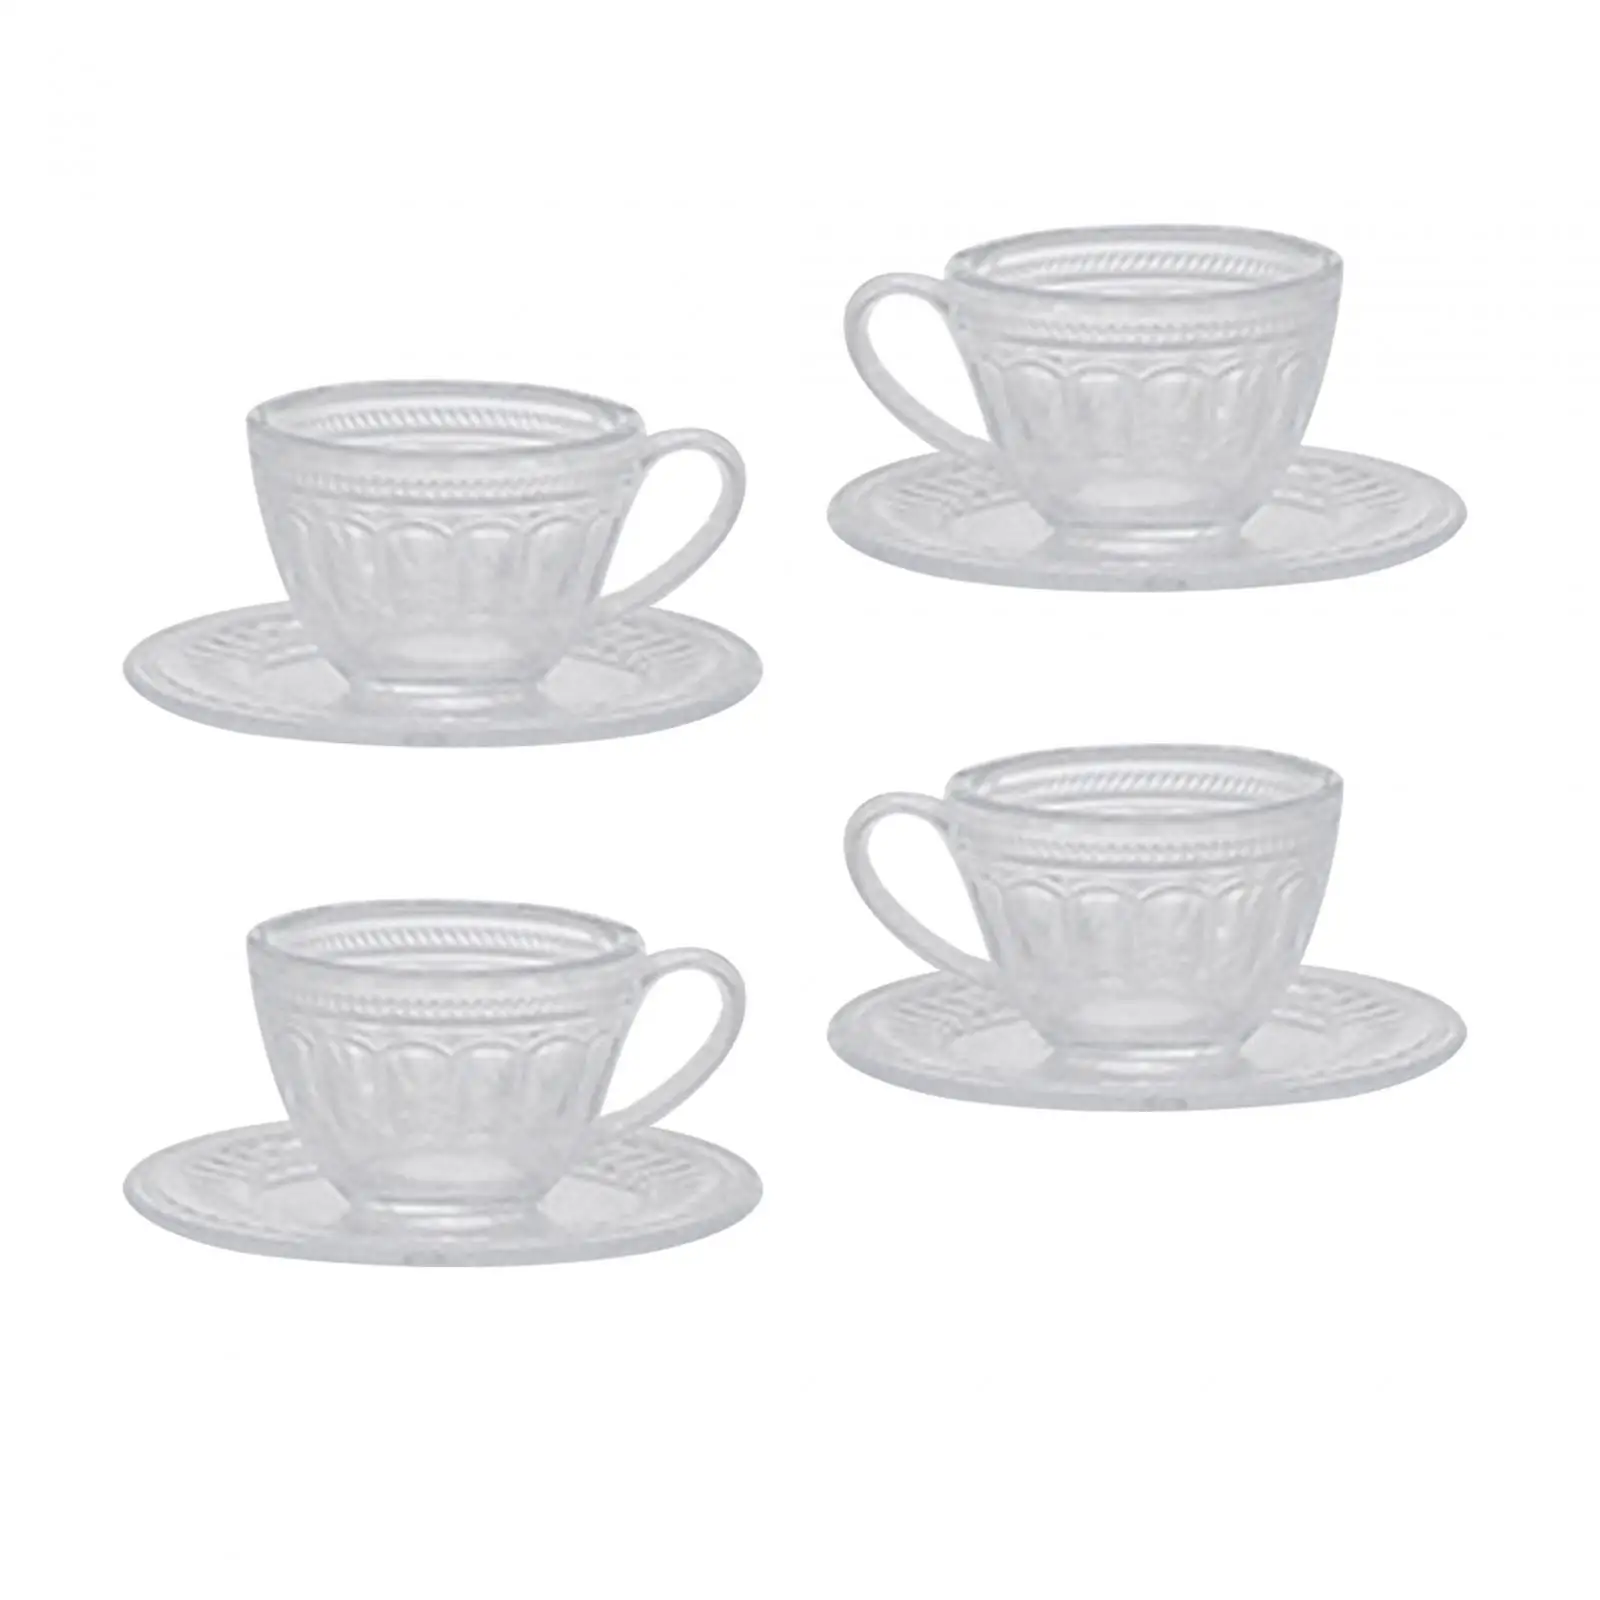 4x Dollhouse Miniature Tea Cup Set Miniature Tableware for Dollhouse Kitchen